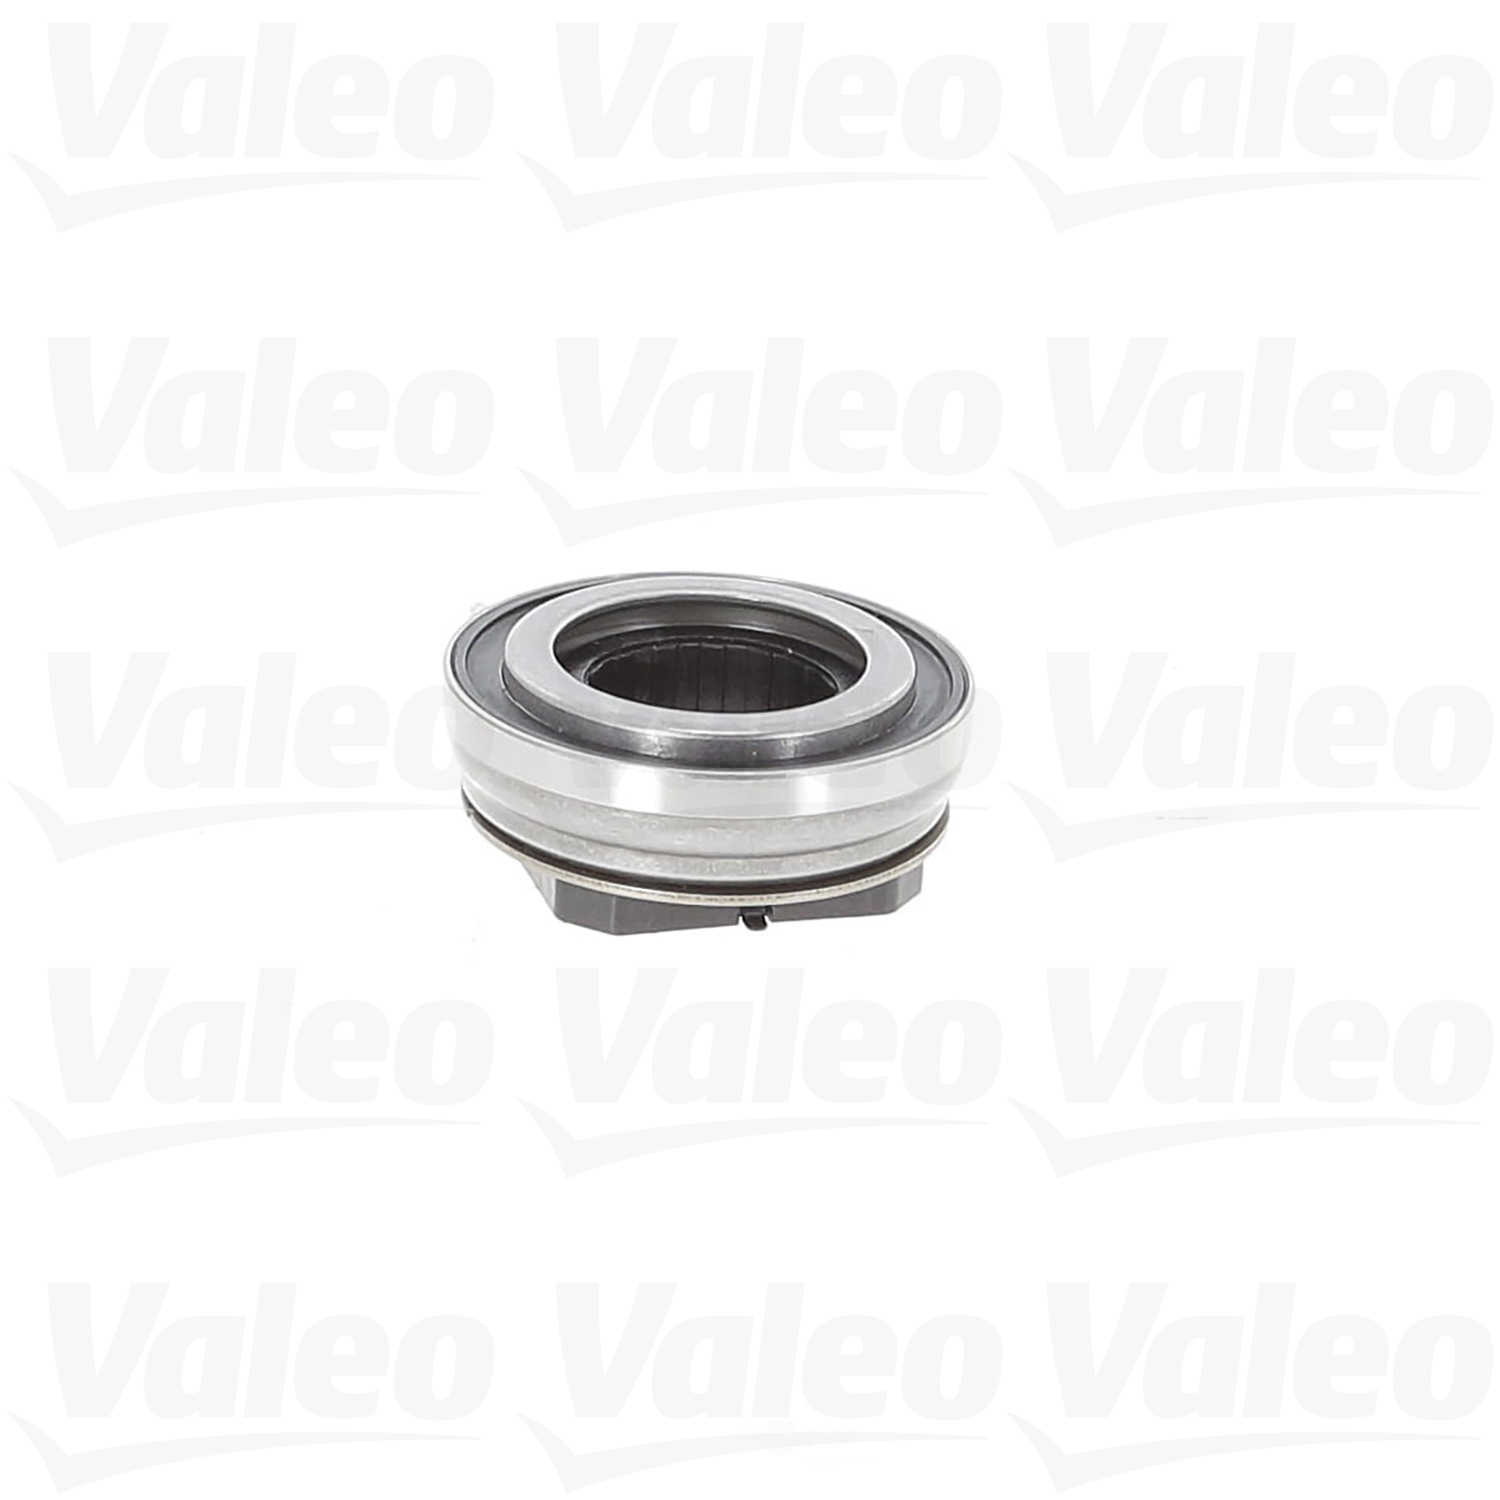 VALEO - Clutch Pressure Plate & Disc Set - VEO 52281407